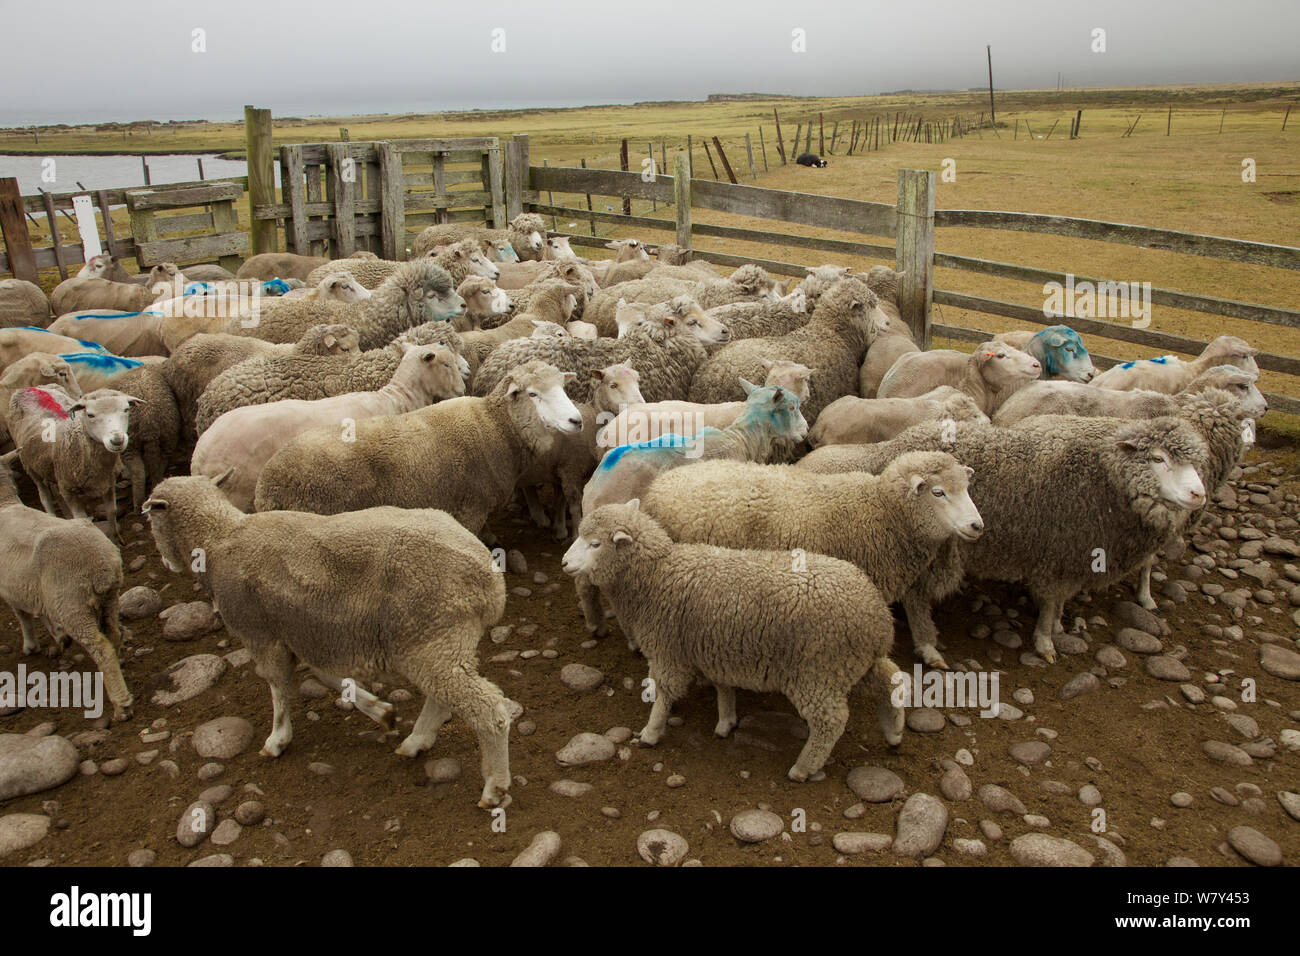 Sheep in pen on Long Island Farm, East Falkland, Falkland Islands. Stock Photo